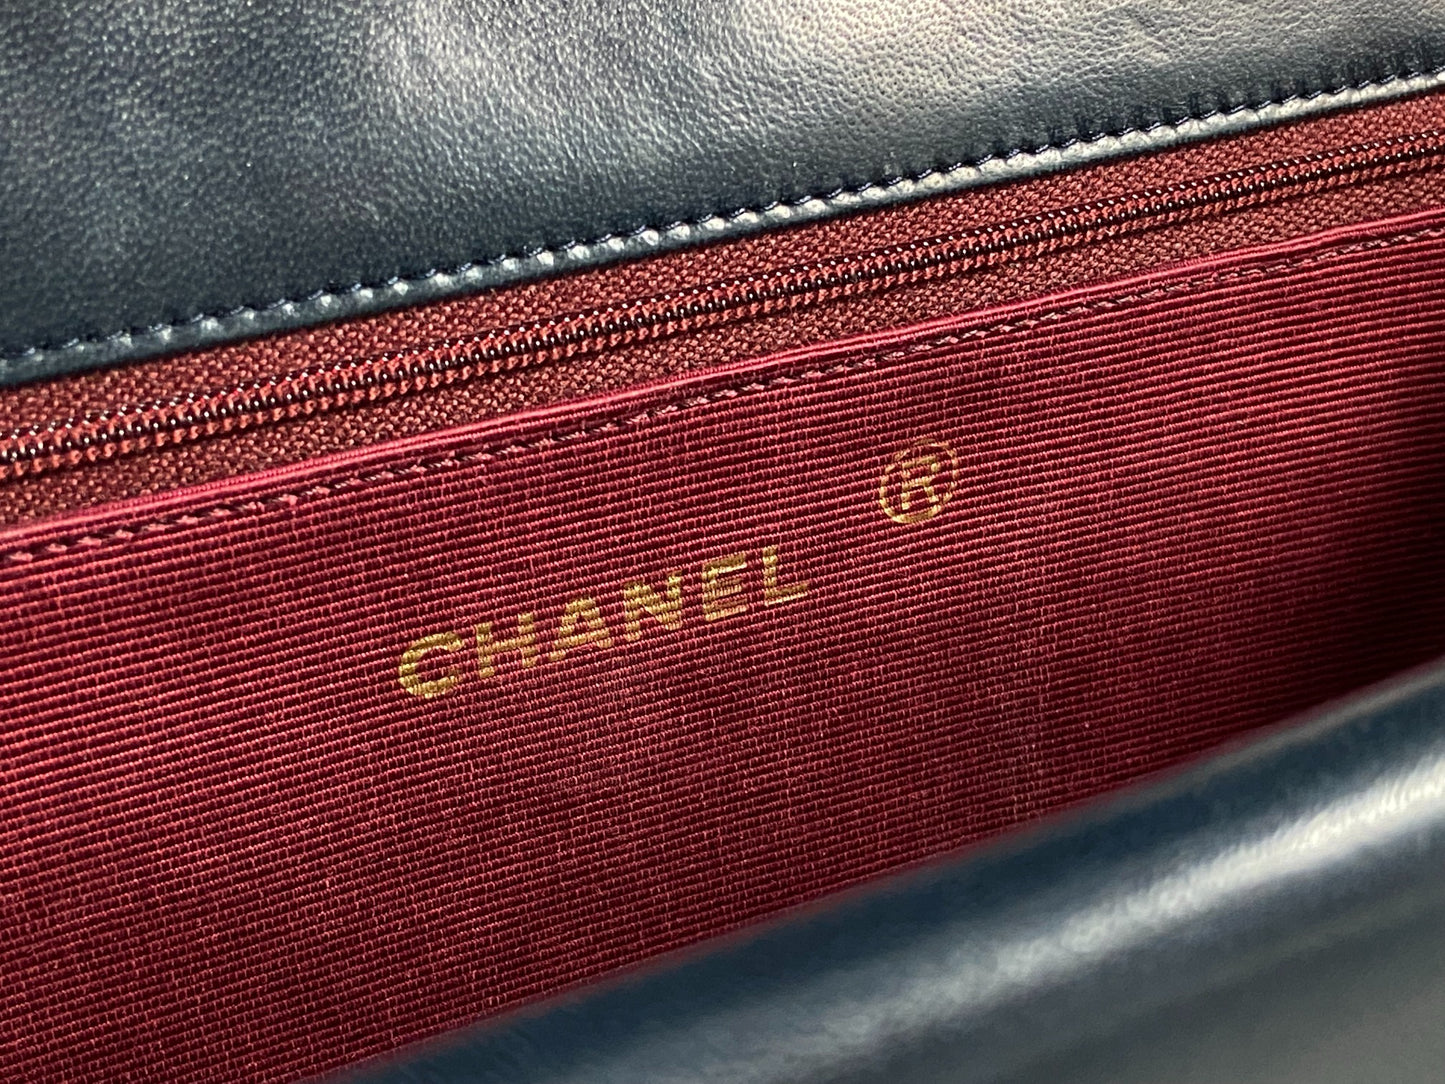 Chanel Matelasse Half-Moon Round Double Flap Bag